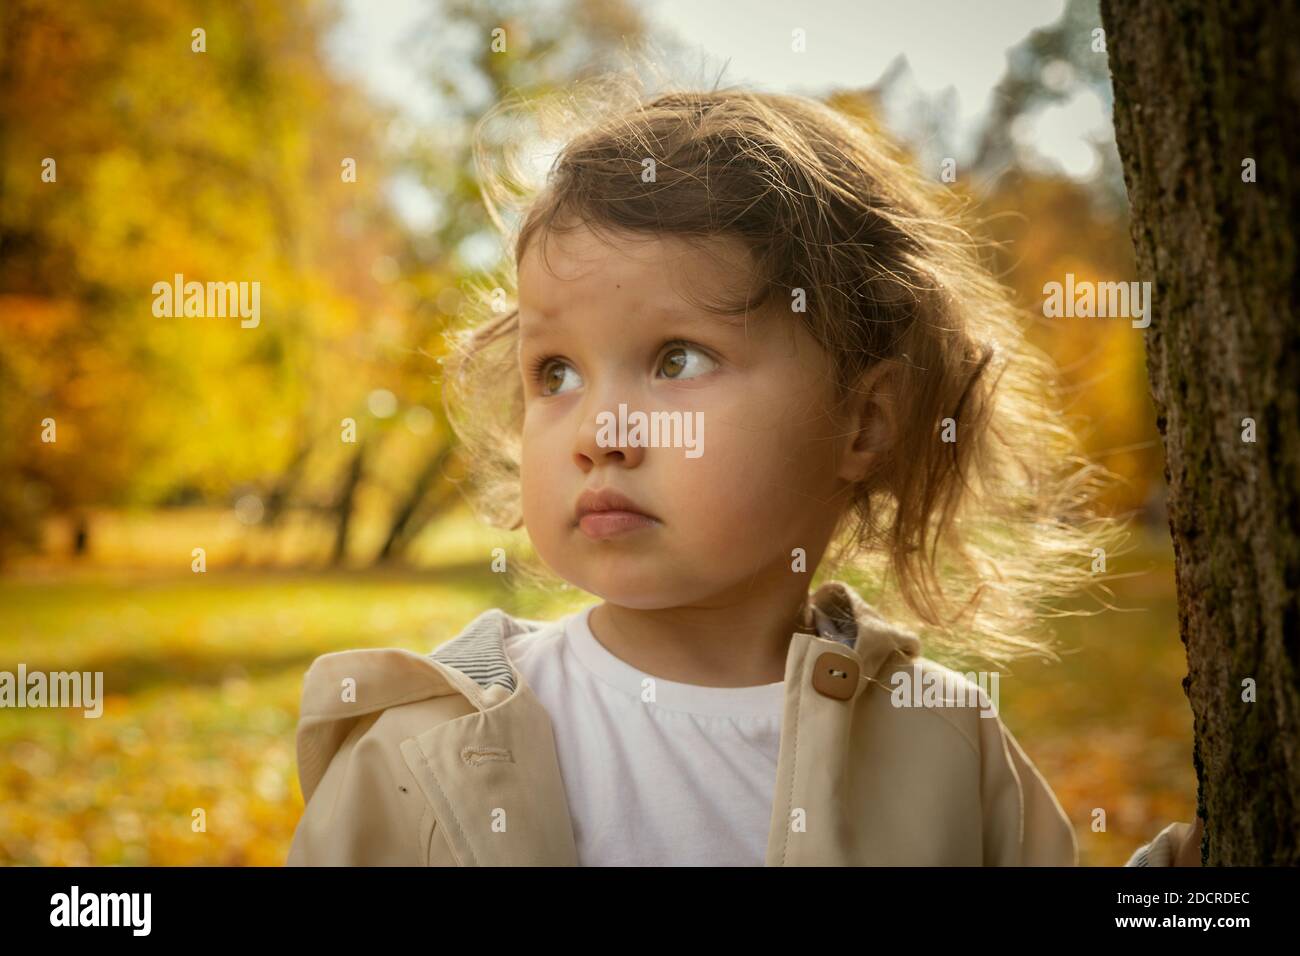 Sad baby girl in an autumn park Stock Photo